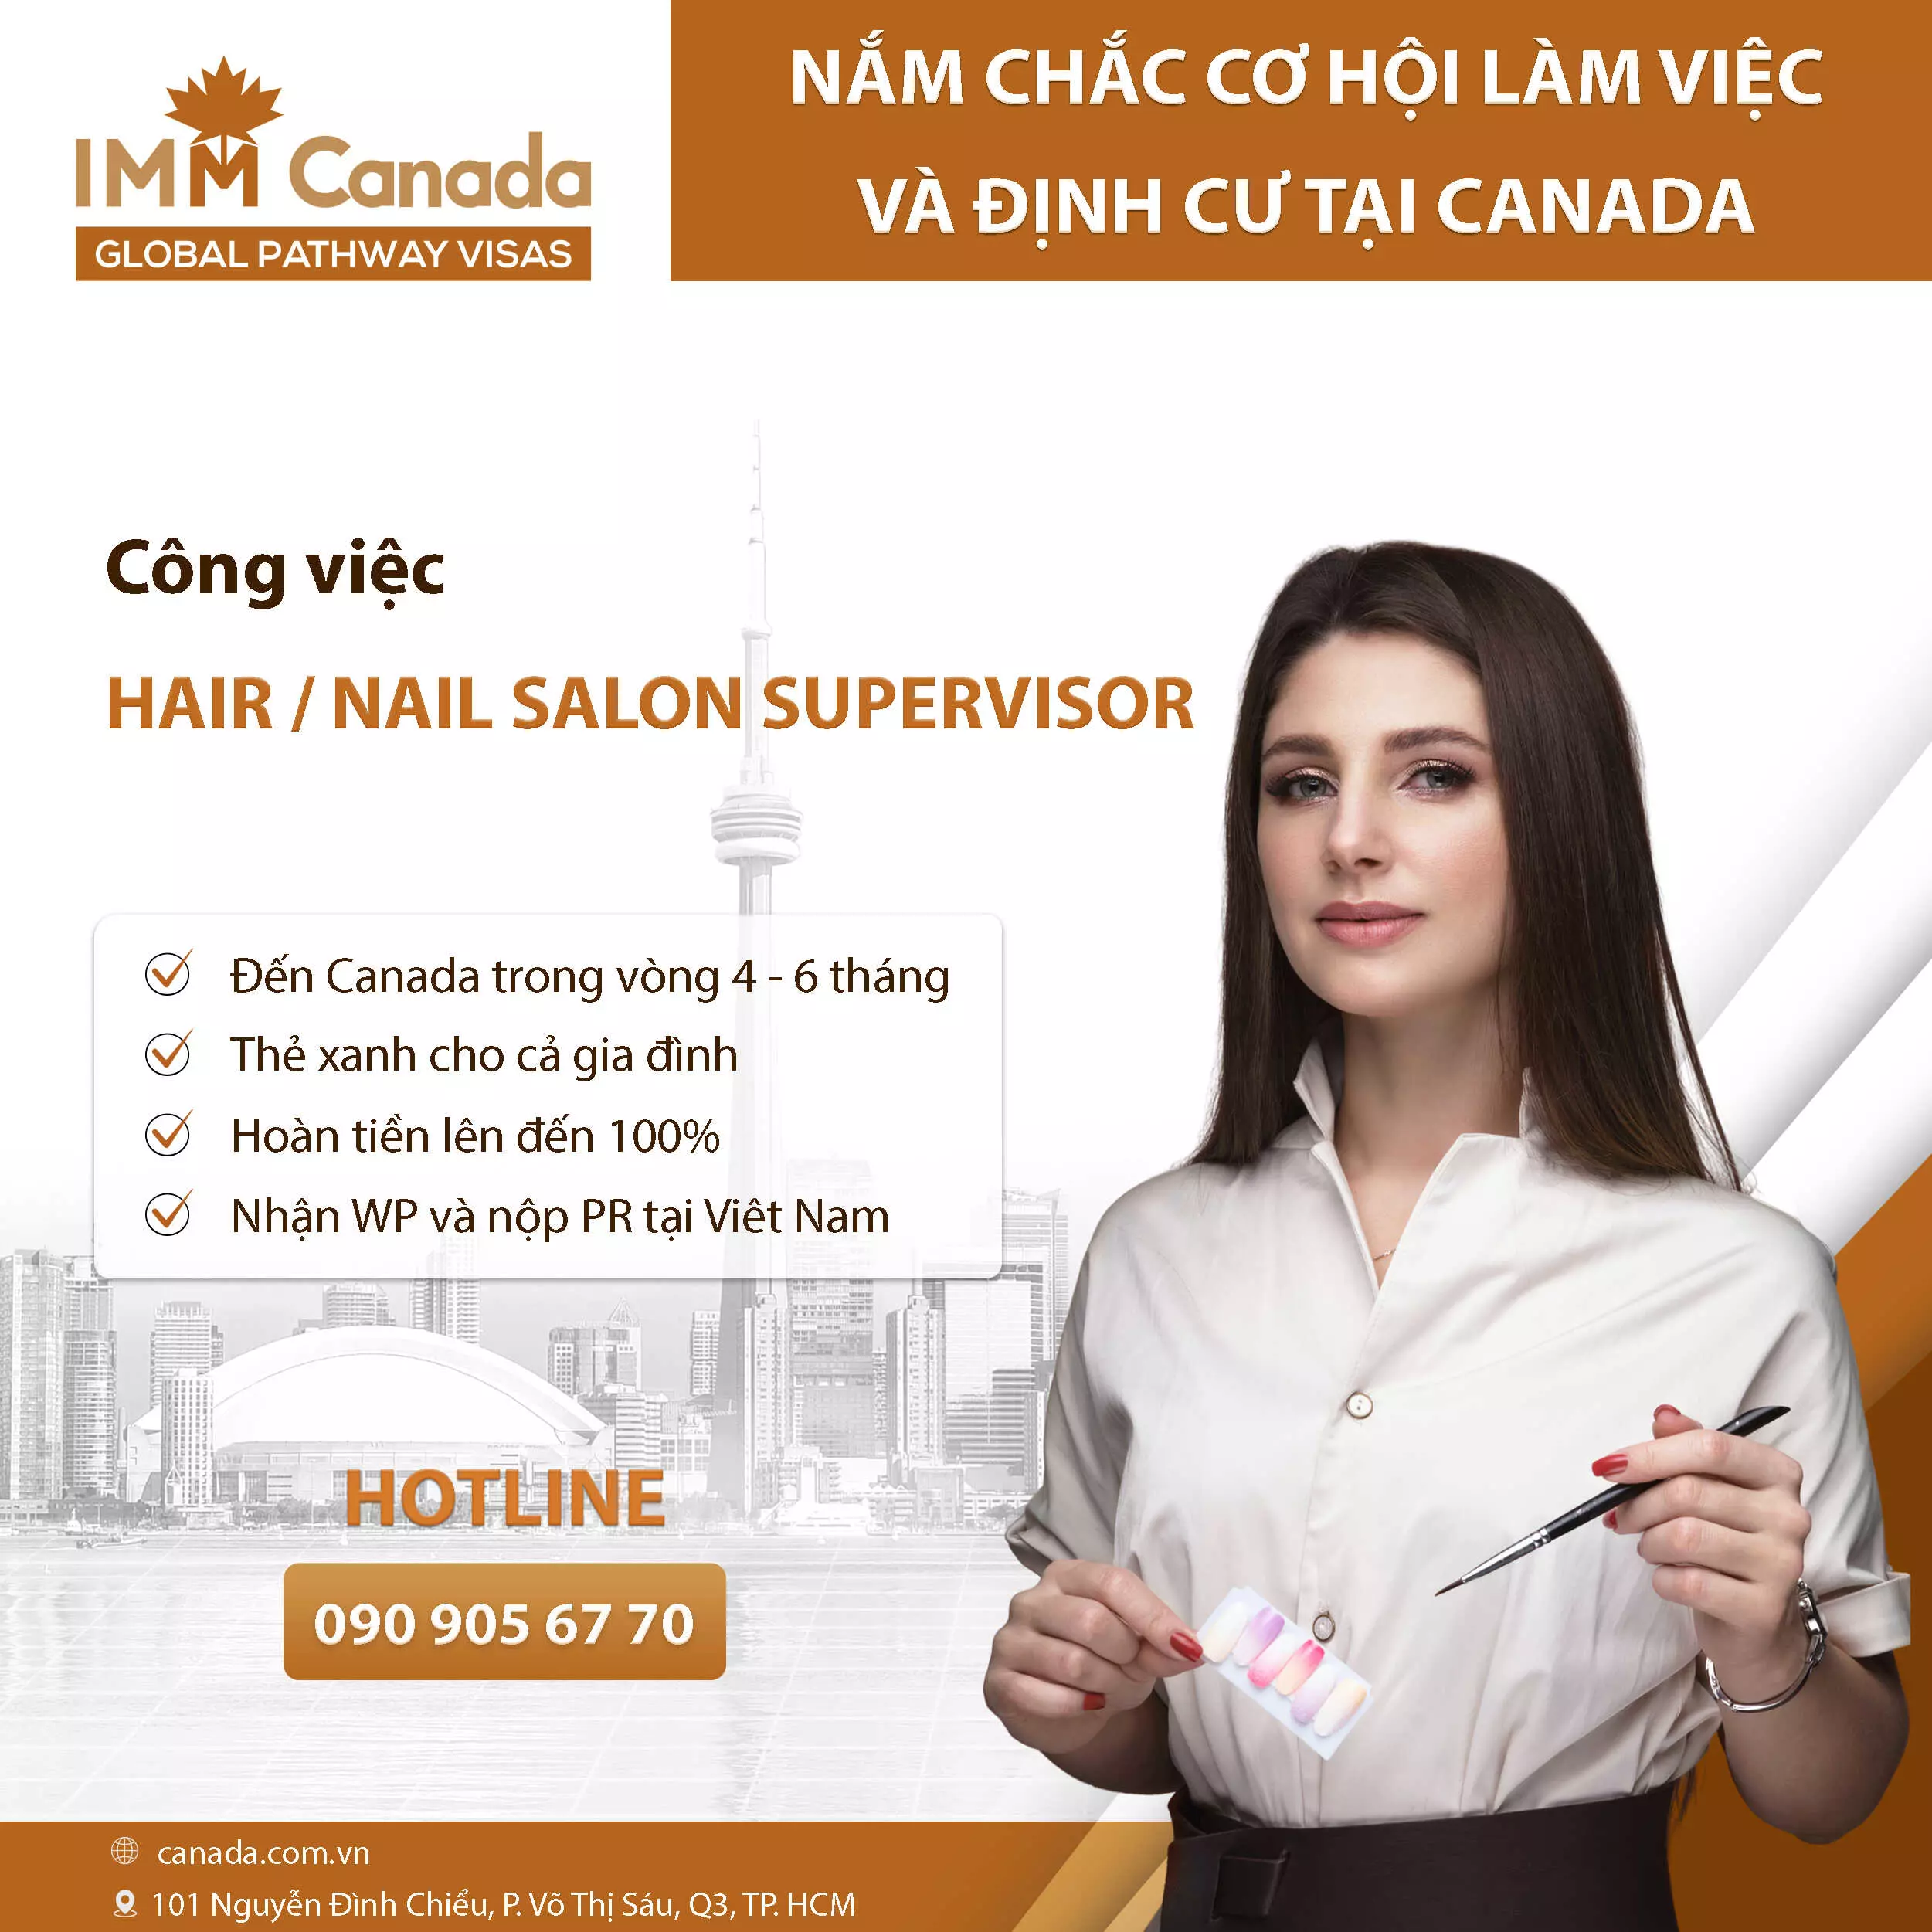 Hair / Nail Salon Supervisor – Giám sát tiệm Tóc/ Nail